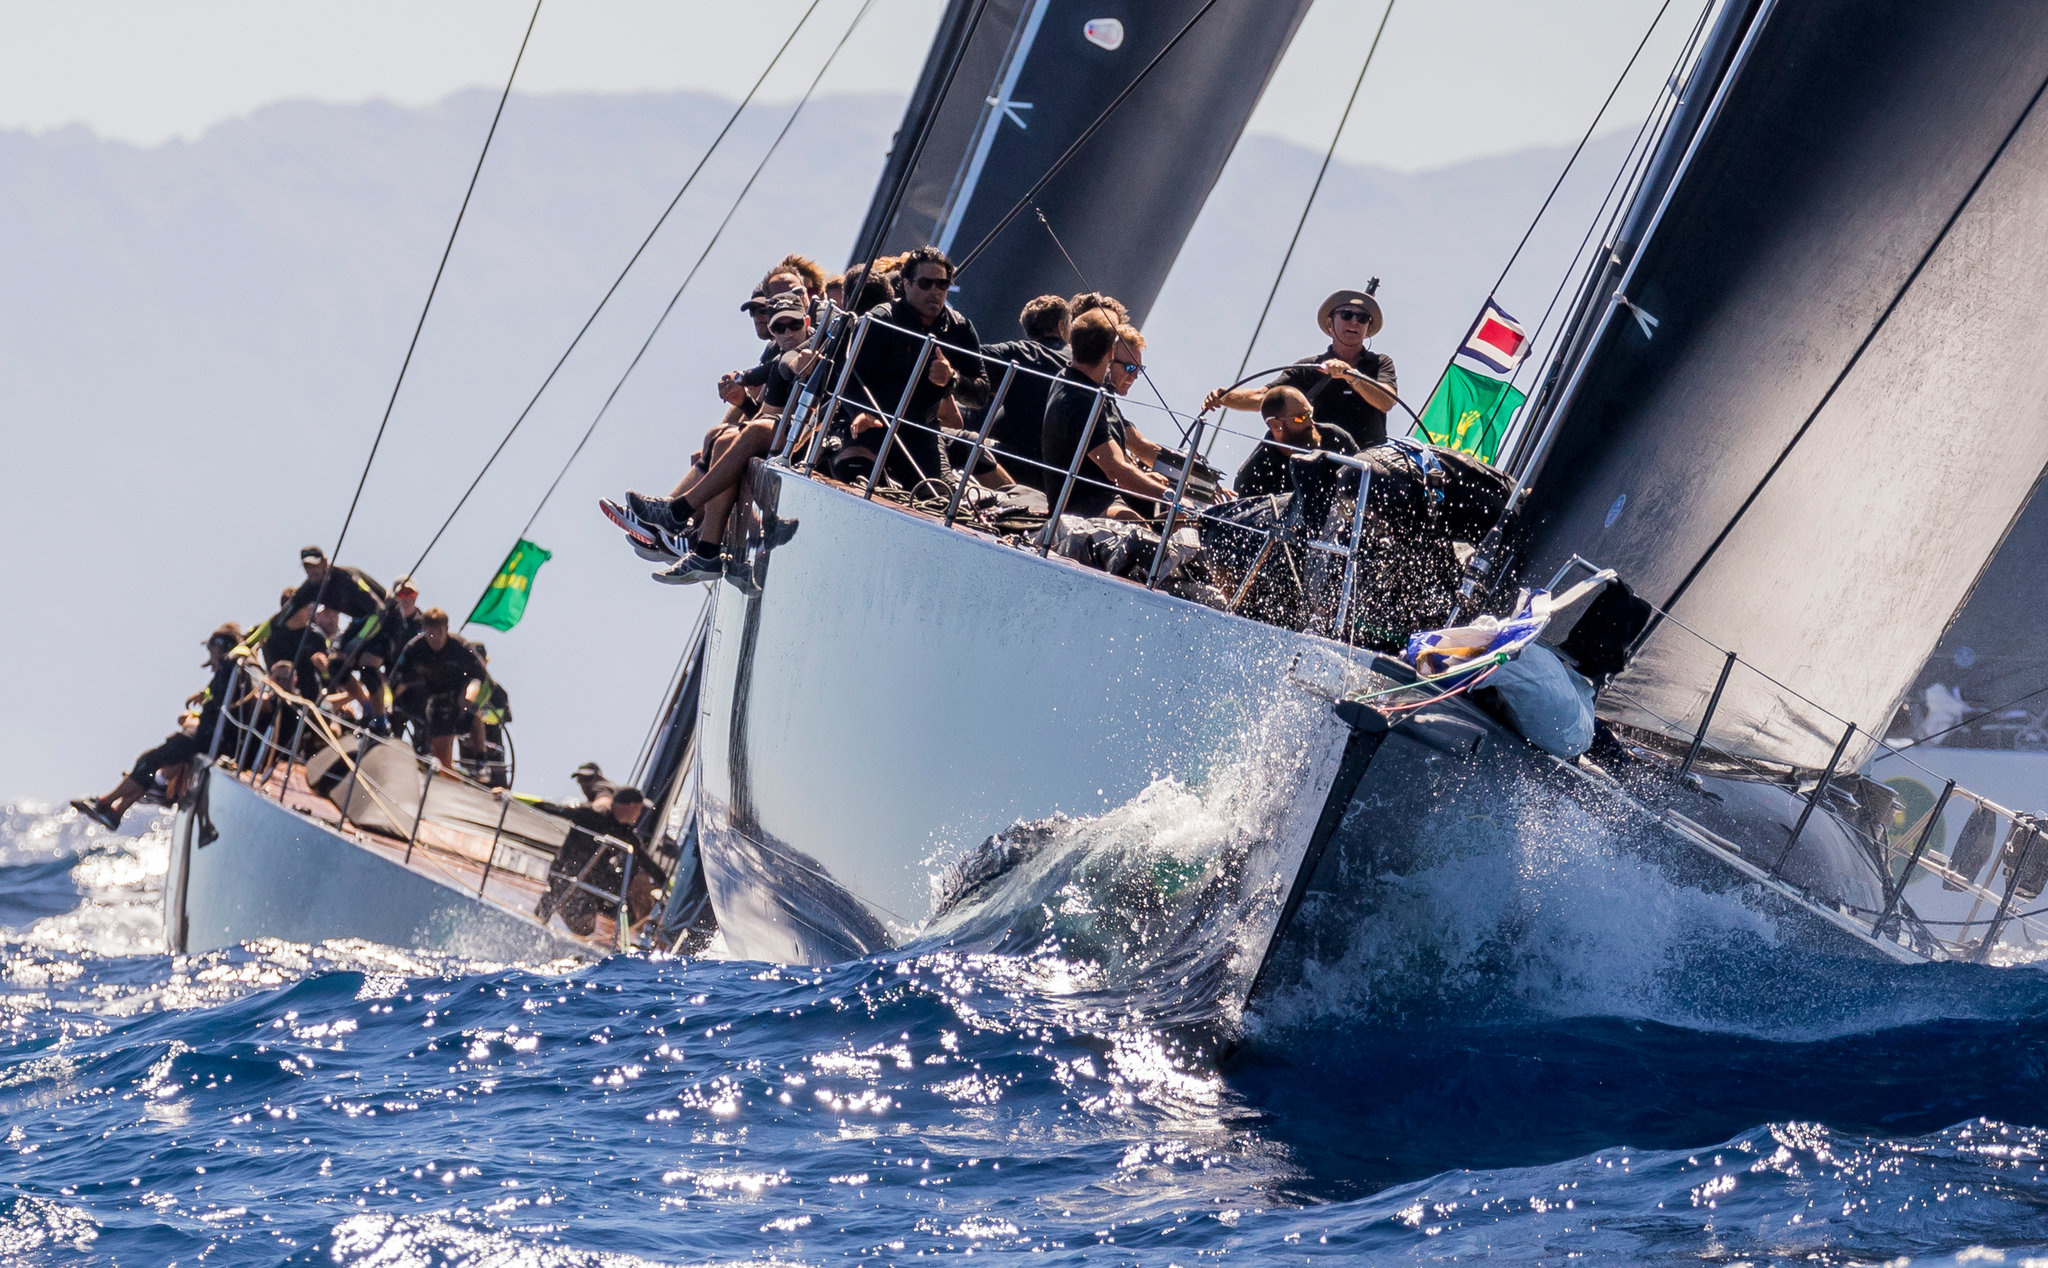 Yacht Racing: Wally class of sailboats, Maxi yacht Rolex Cup 2016, Water tournament. 2050x1270 HD Wallpaper.